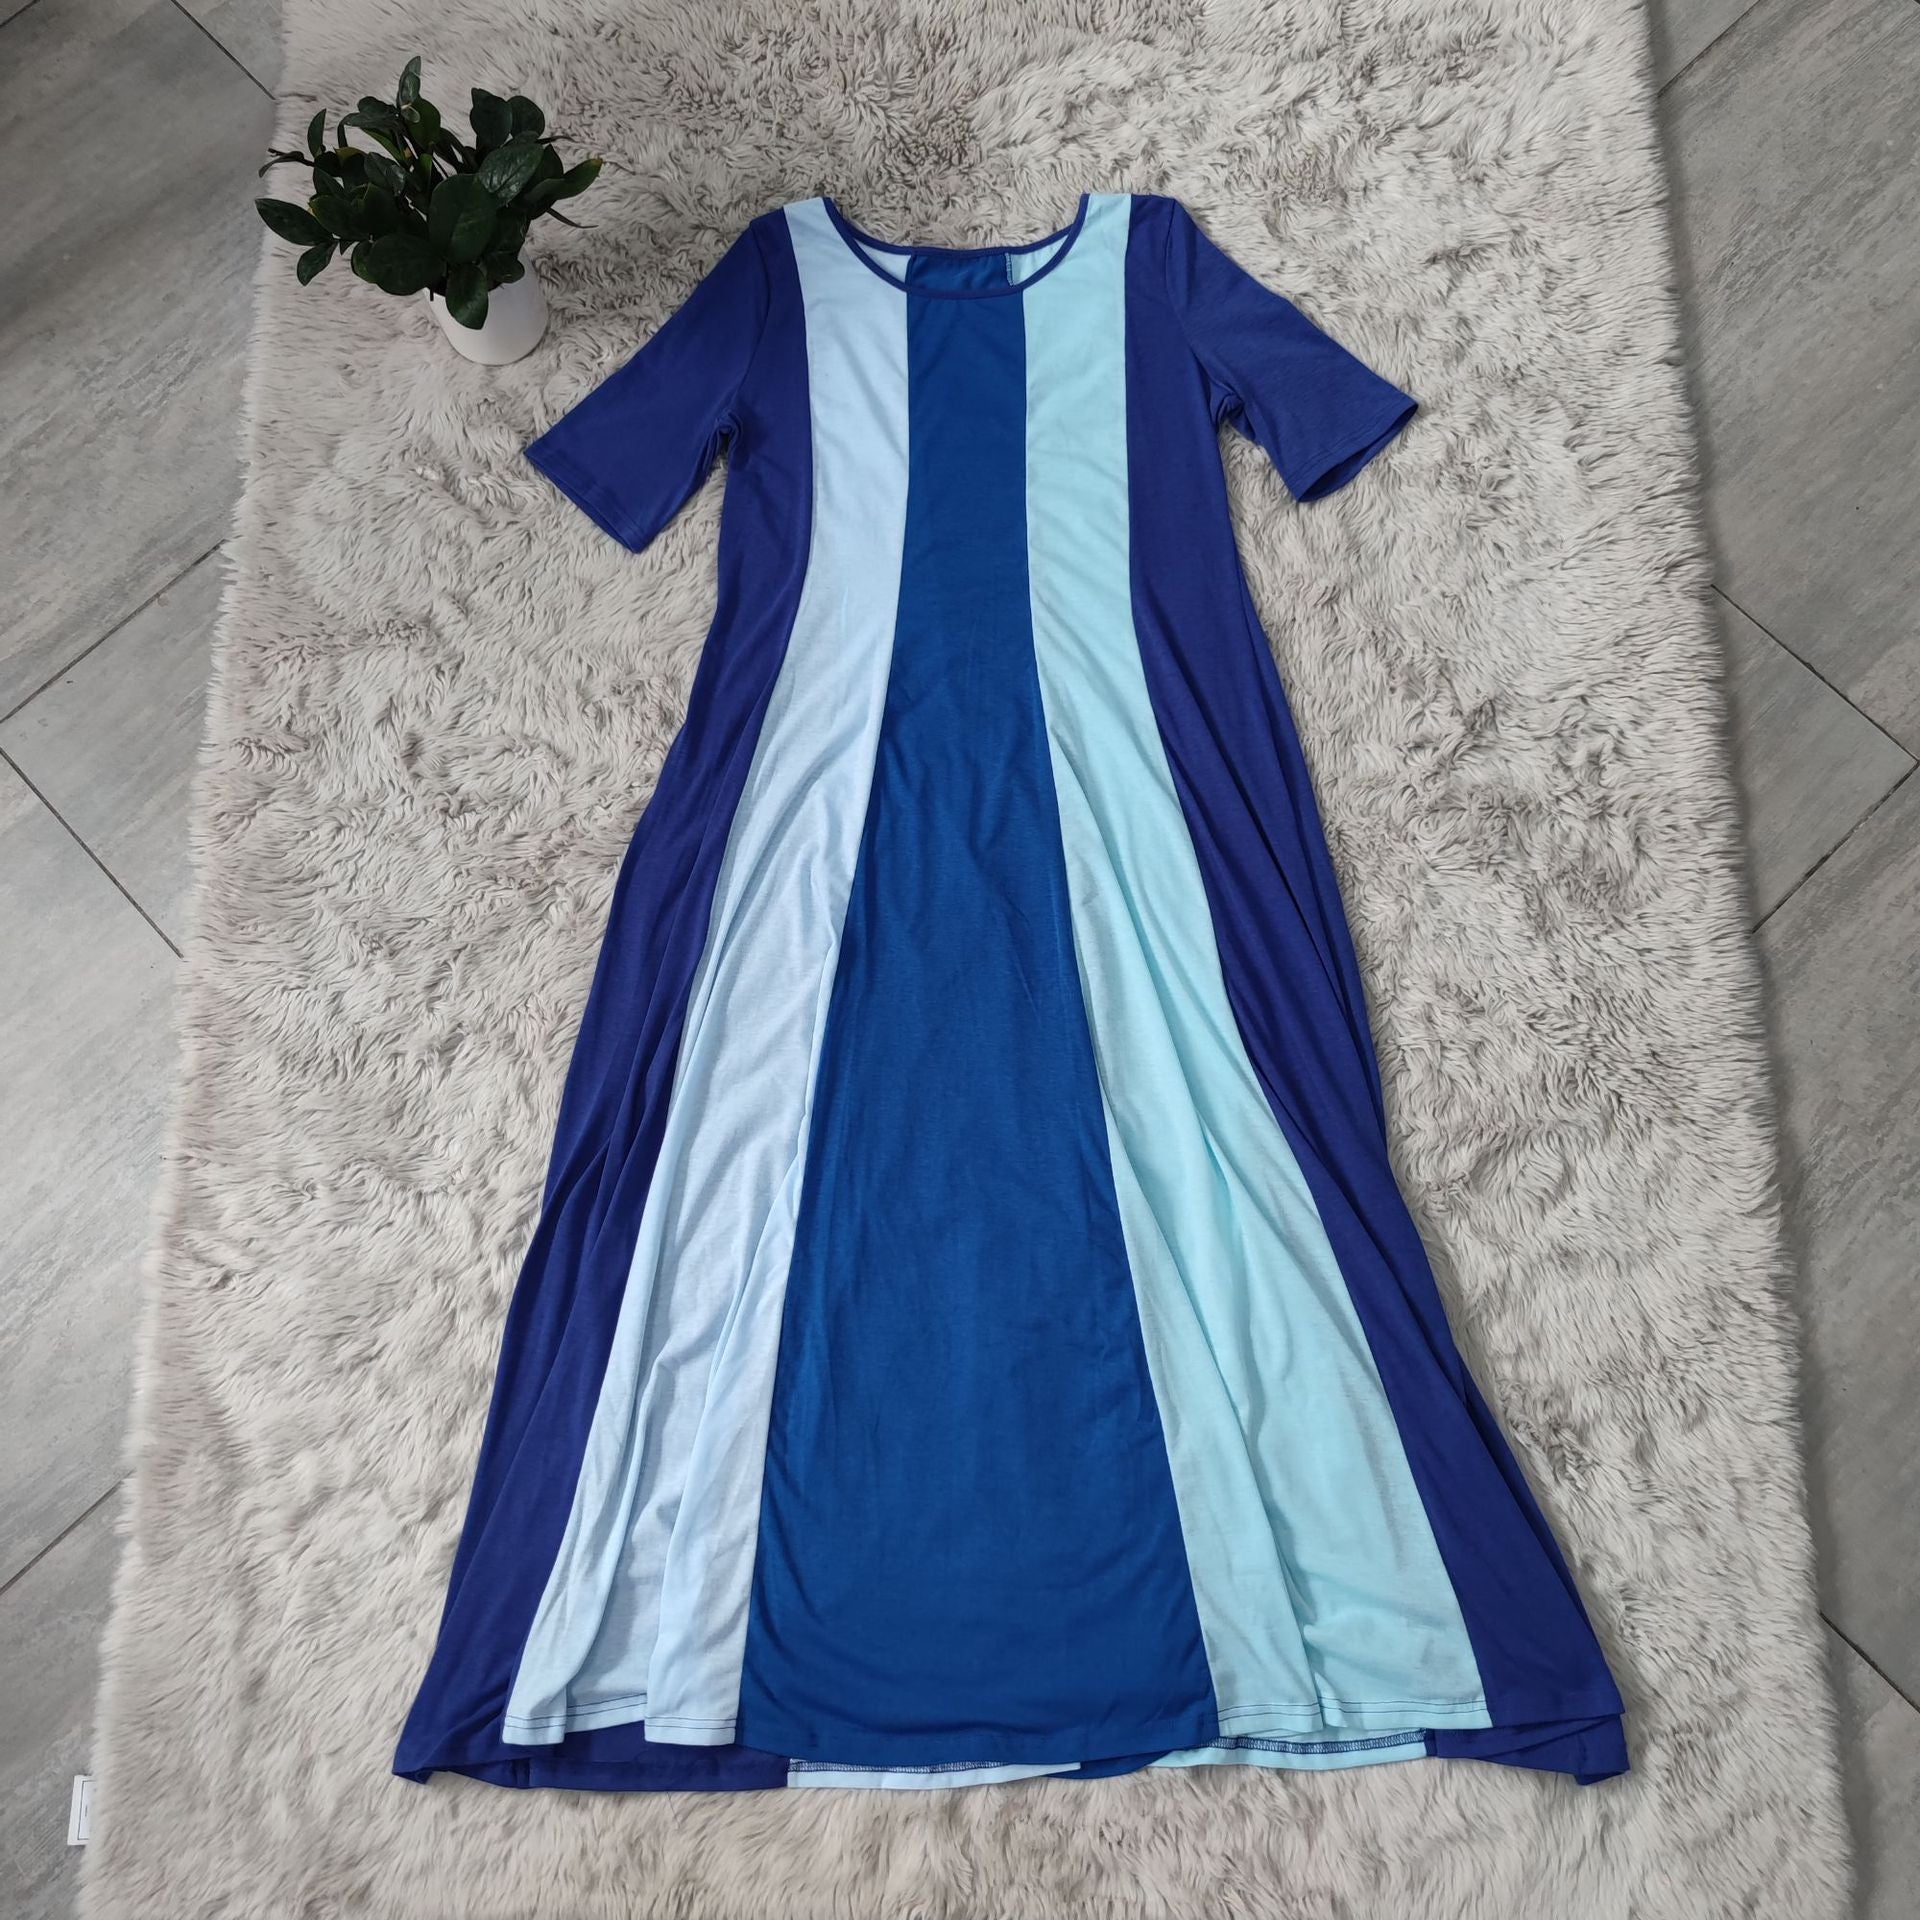 Aovica L-4XL Plus Size Women's Clothing Boho Maxi Dress Ladies Fashion O-Neck Casual Short Sleeve Summer Dress Vestidos Large Size 3XL